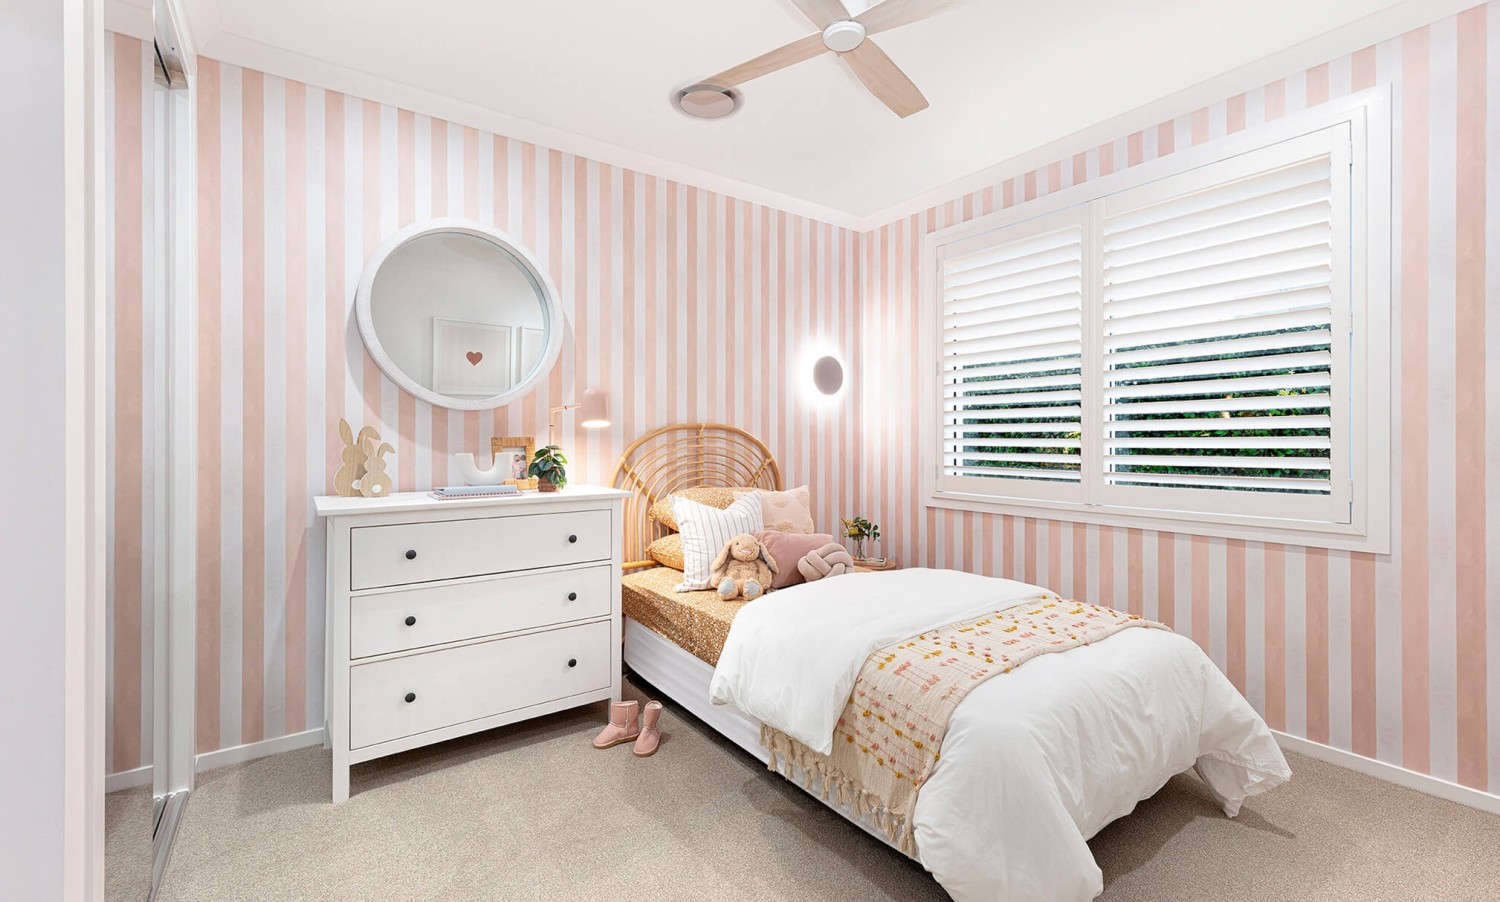 Lola Single Storey Home Design Kids Bedroom - Girls